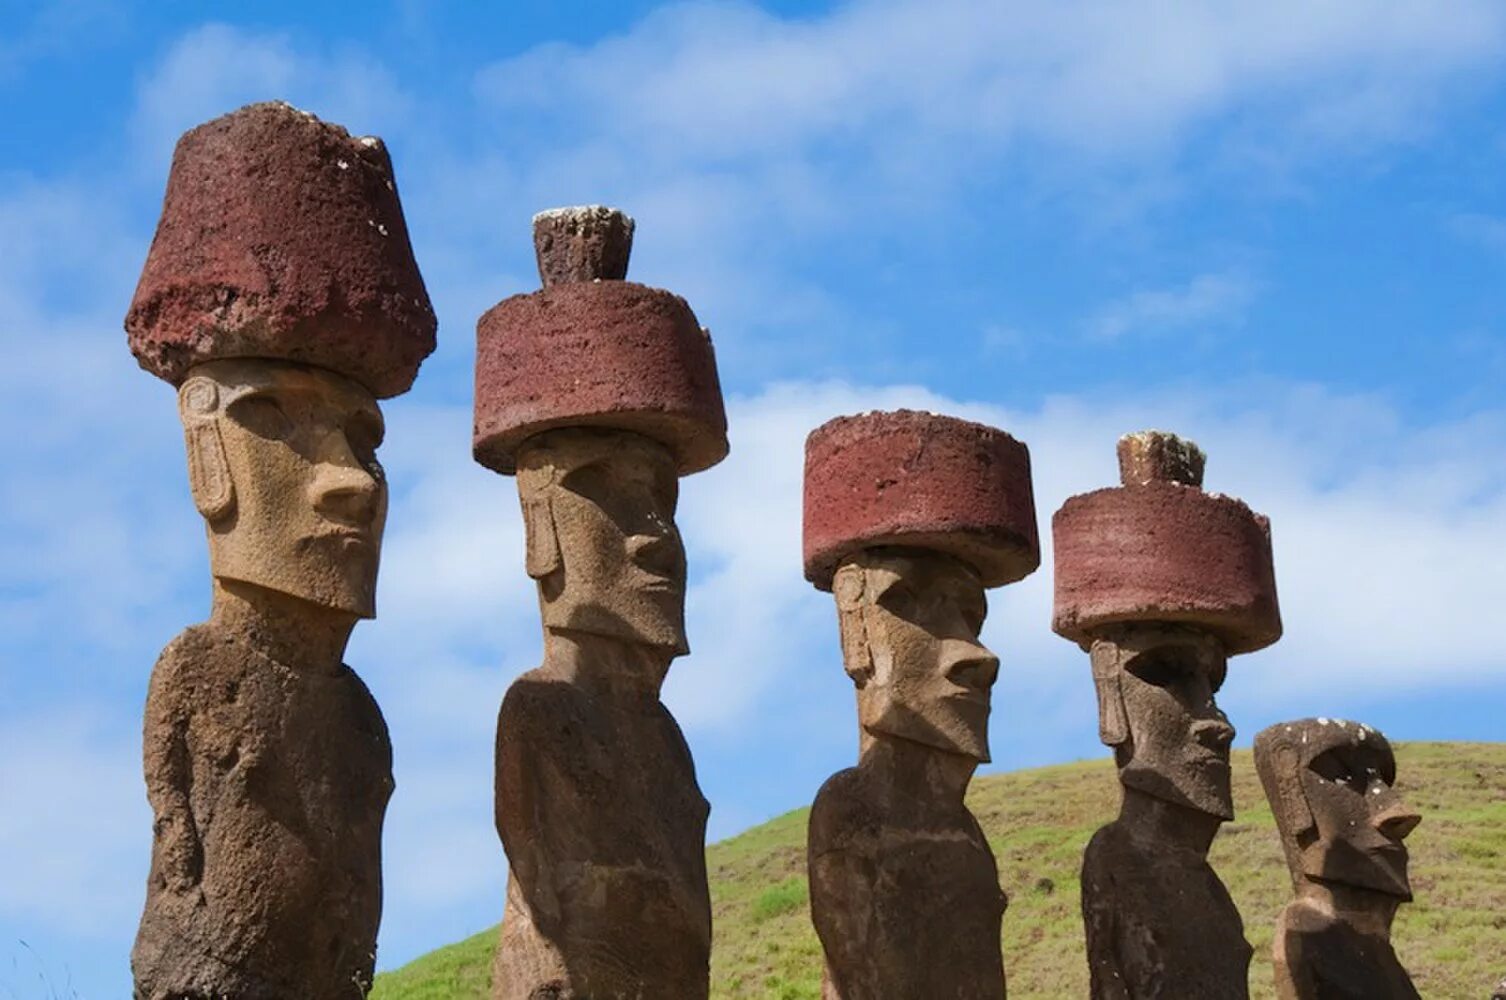 Остров Пасхи статуи Моаи. Моаи на острове Пасхи. Каменные статуи Моаи остров Пасхи Чили. Скульптуры Моаи на острове Пасхи.